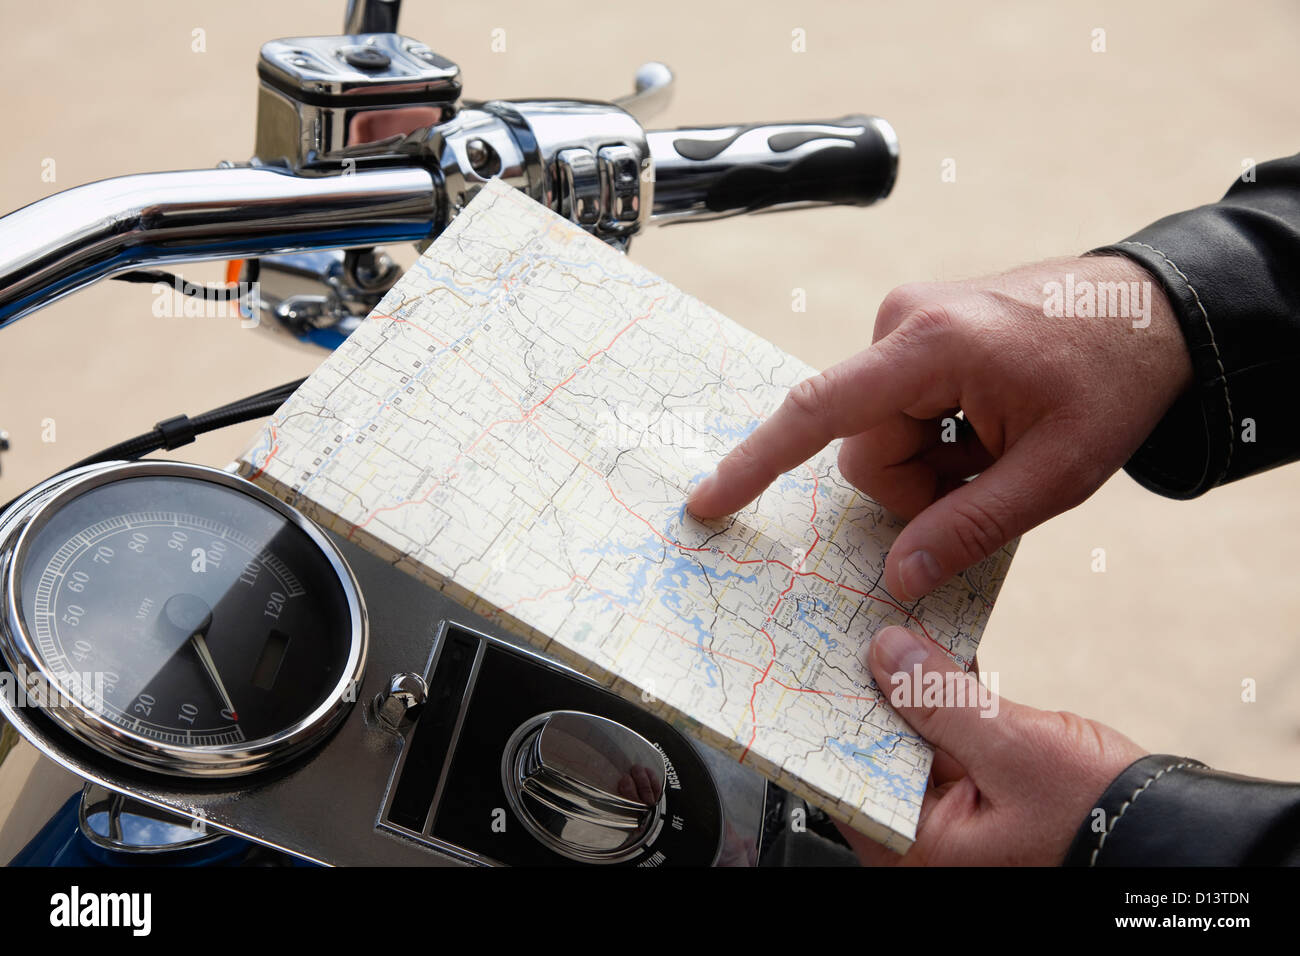 USA, Illinois, Metamora, Close up of man's hand holding map near motorcycle handlebars Stock Photo